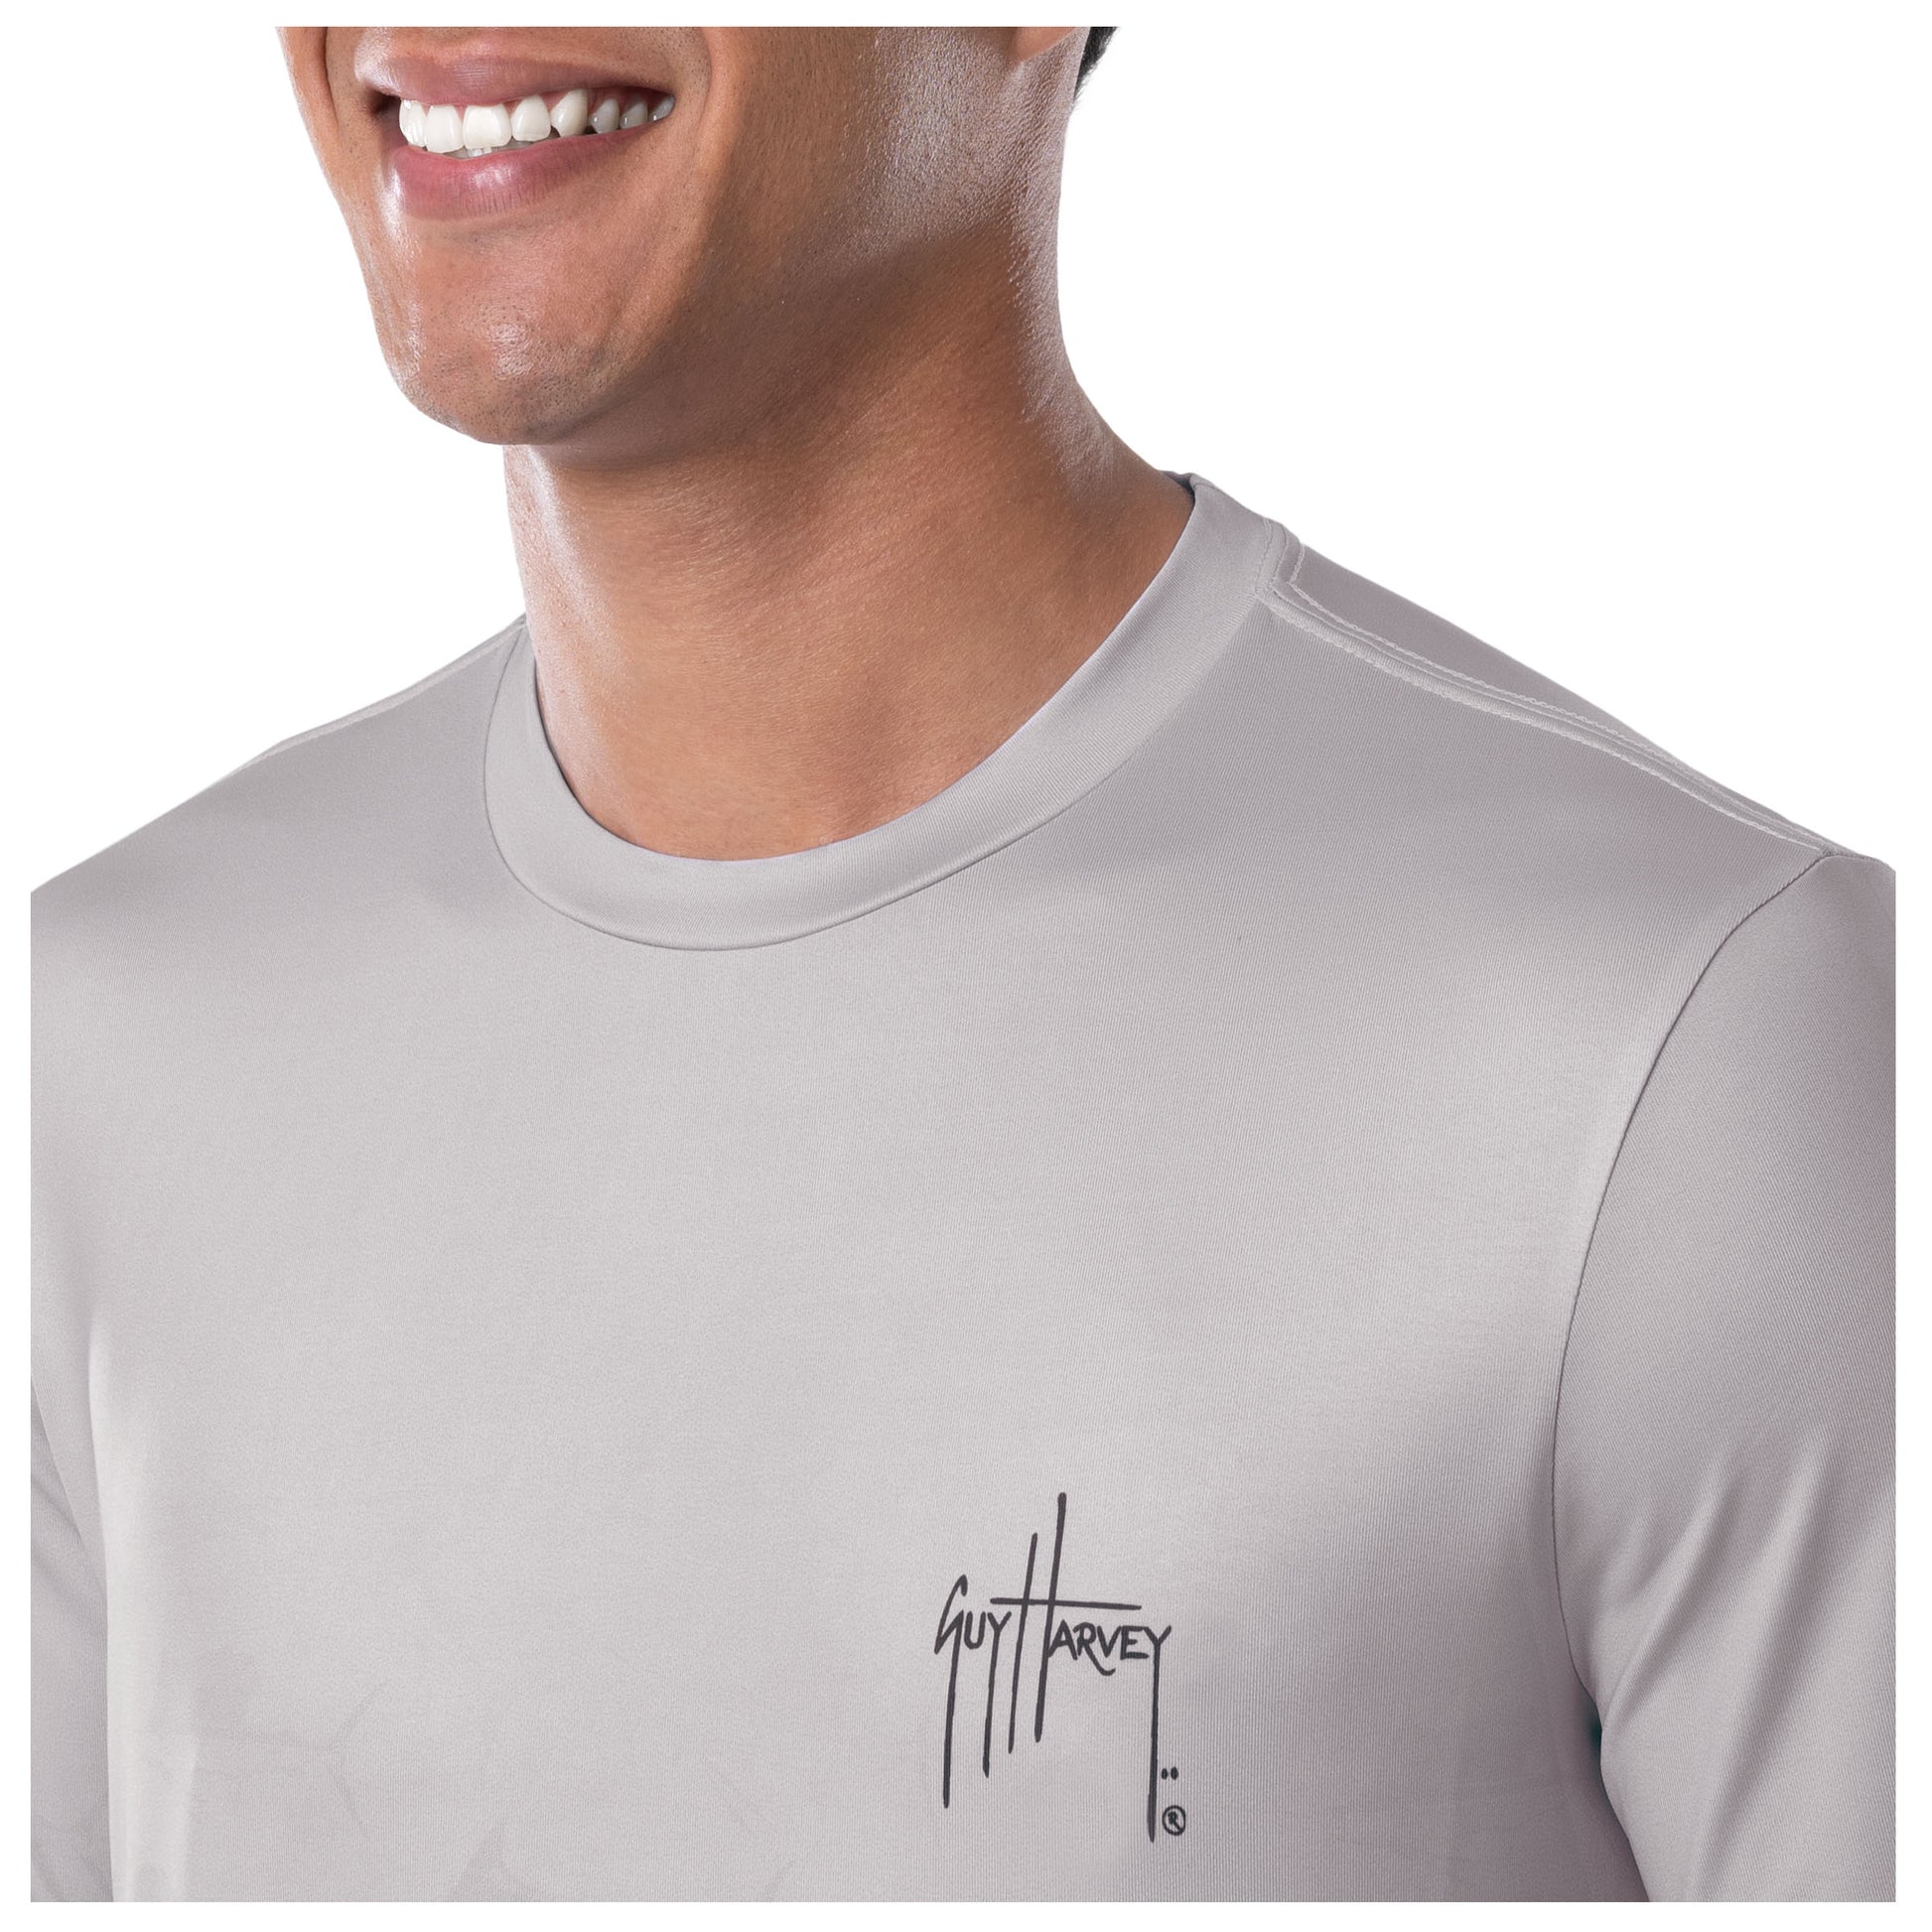 Guy Harvey Performance Uv Protection Graphic Print Long Sleeve T Shirt, $40, Macy's